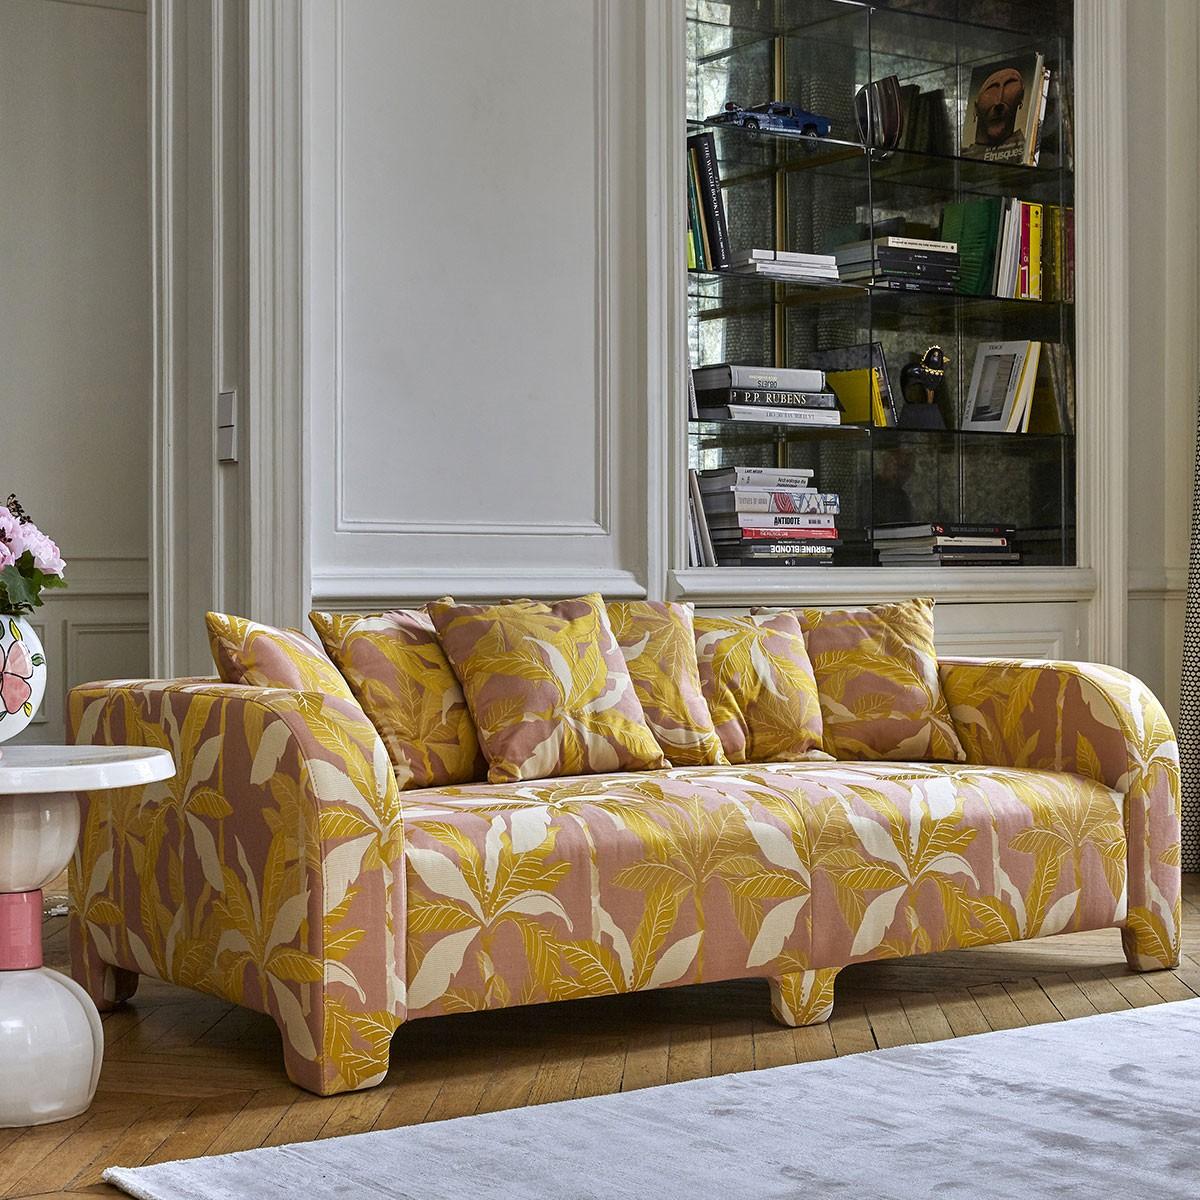 Popus Editions Graziella 3 Seater Sofa in Amber Venice Chenille Velvet Fabric In New Condition For Sale In Paris, FR